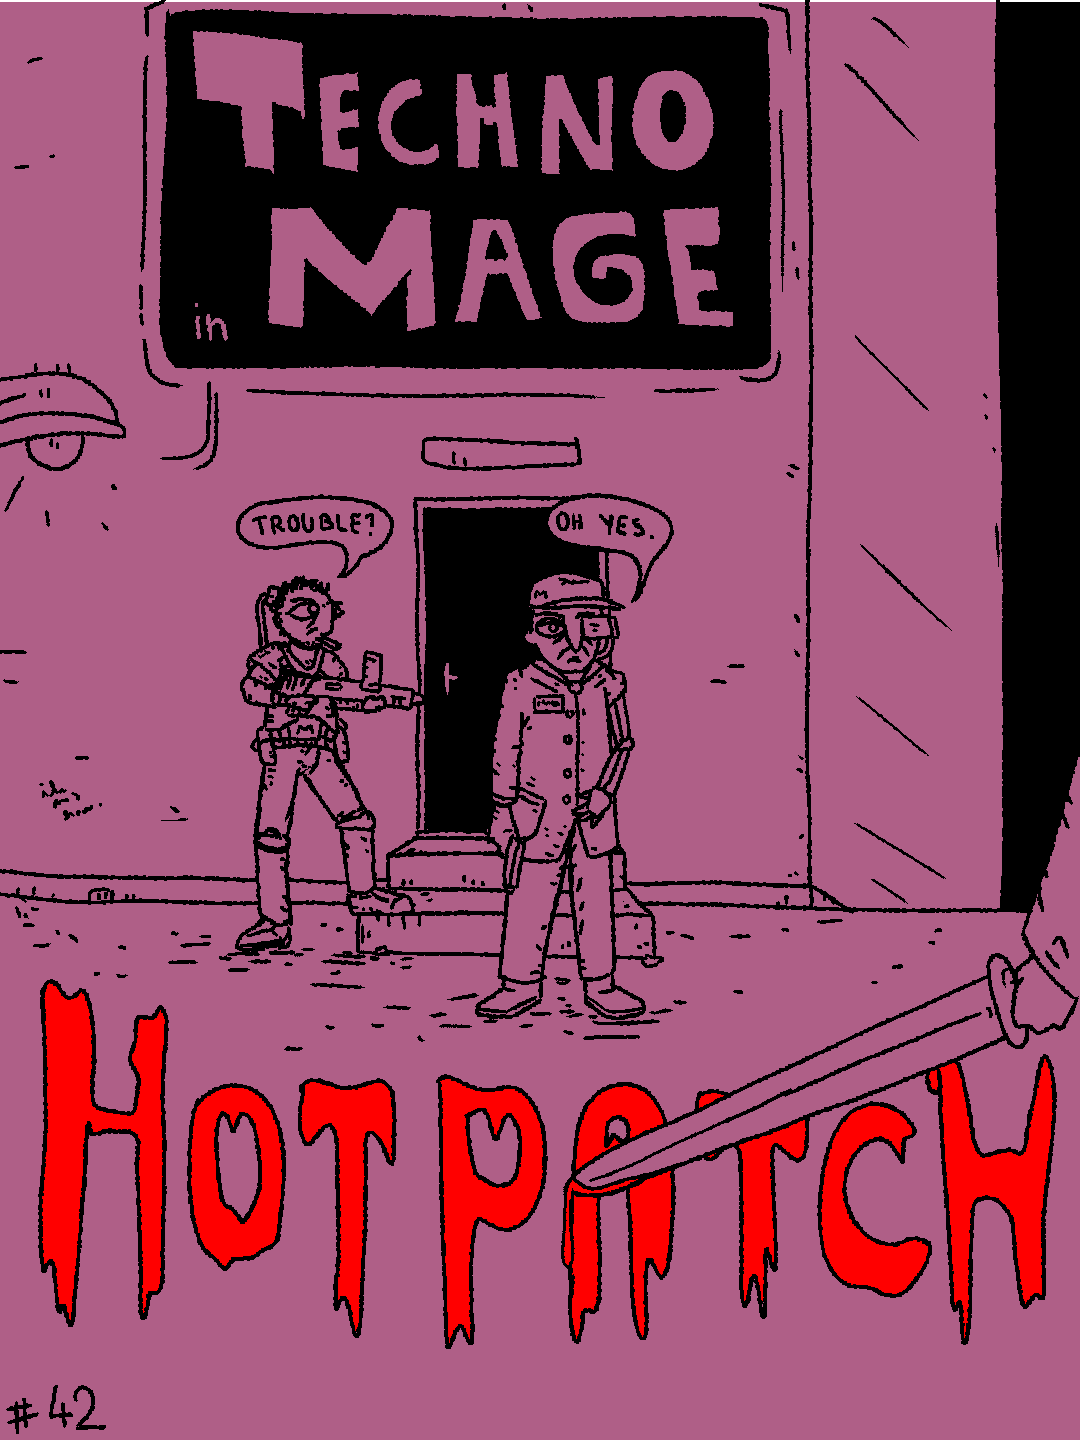 Hotpatch